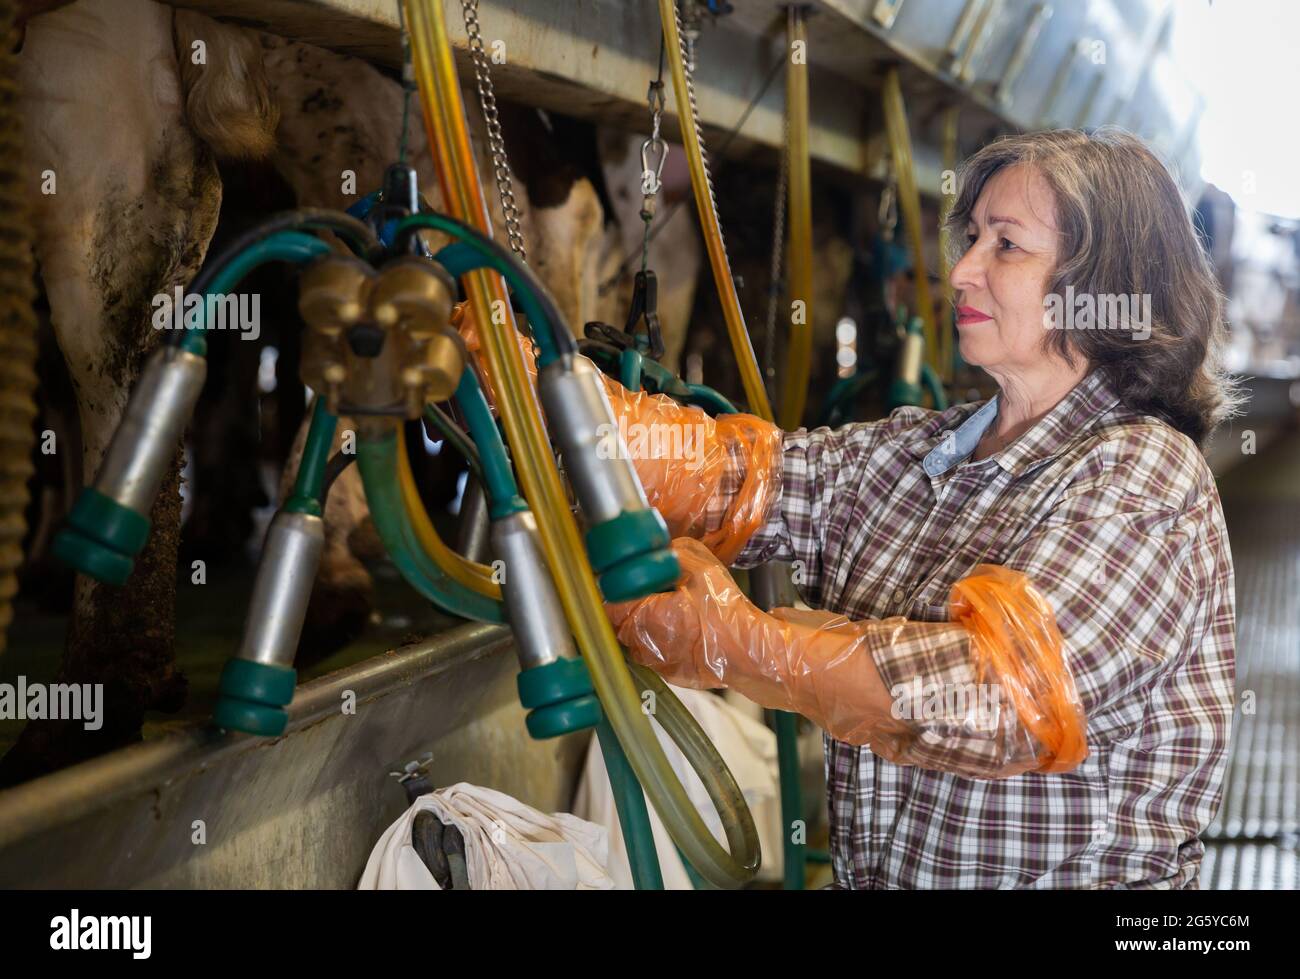 Elderly woman preparing equipments for milking cows Stock Photo